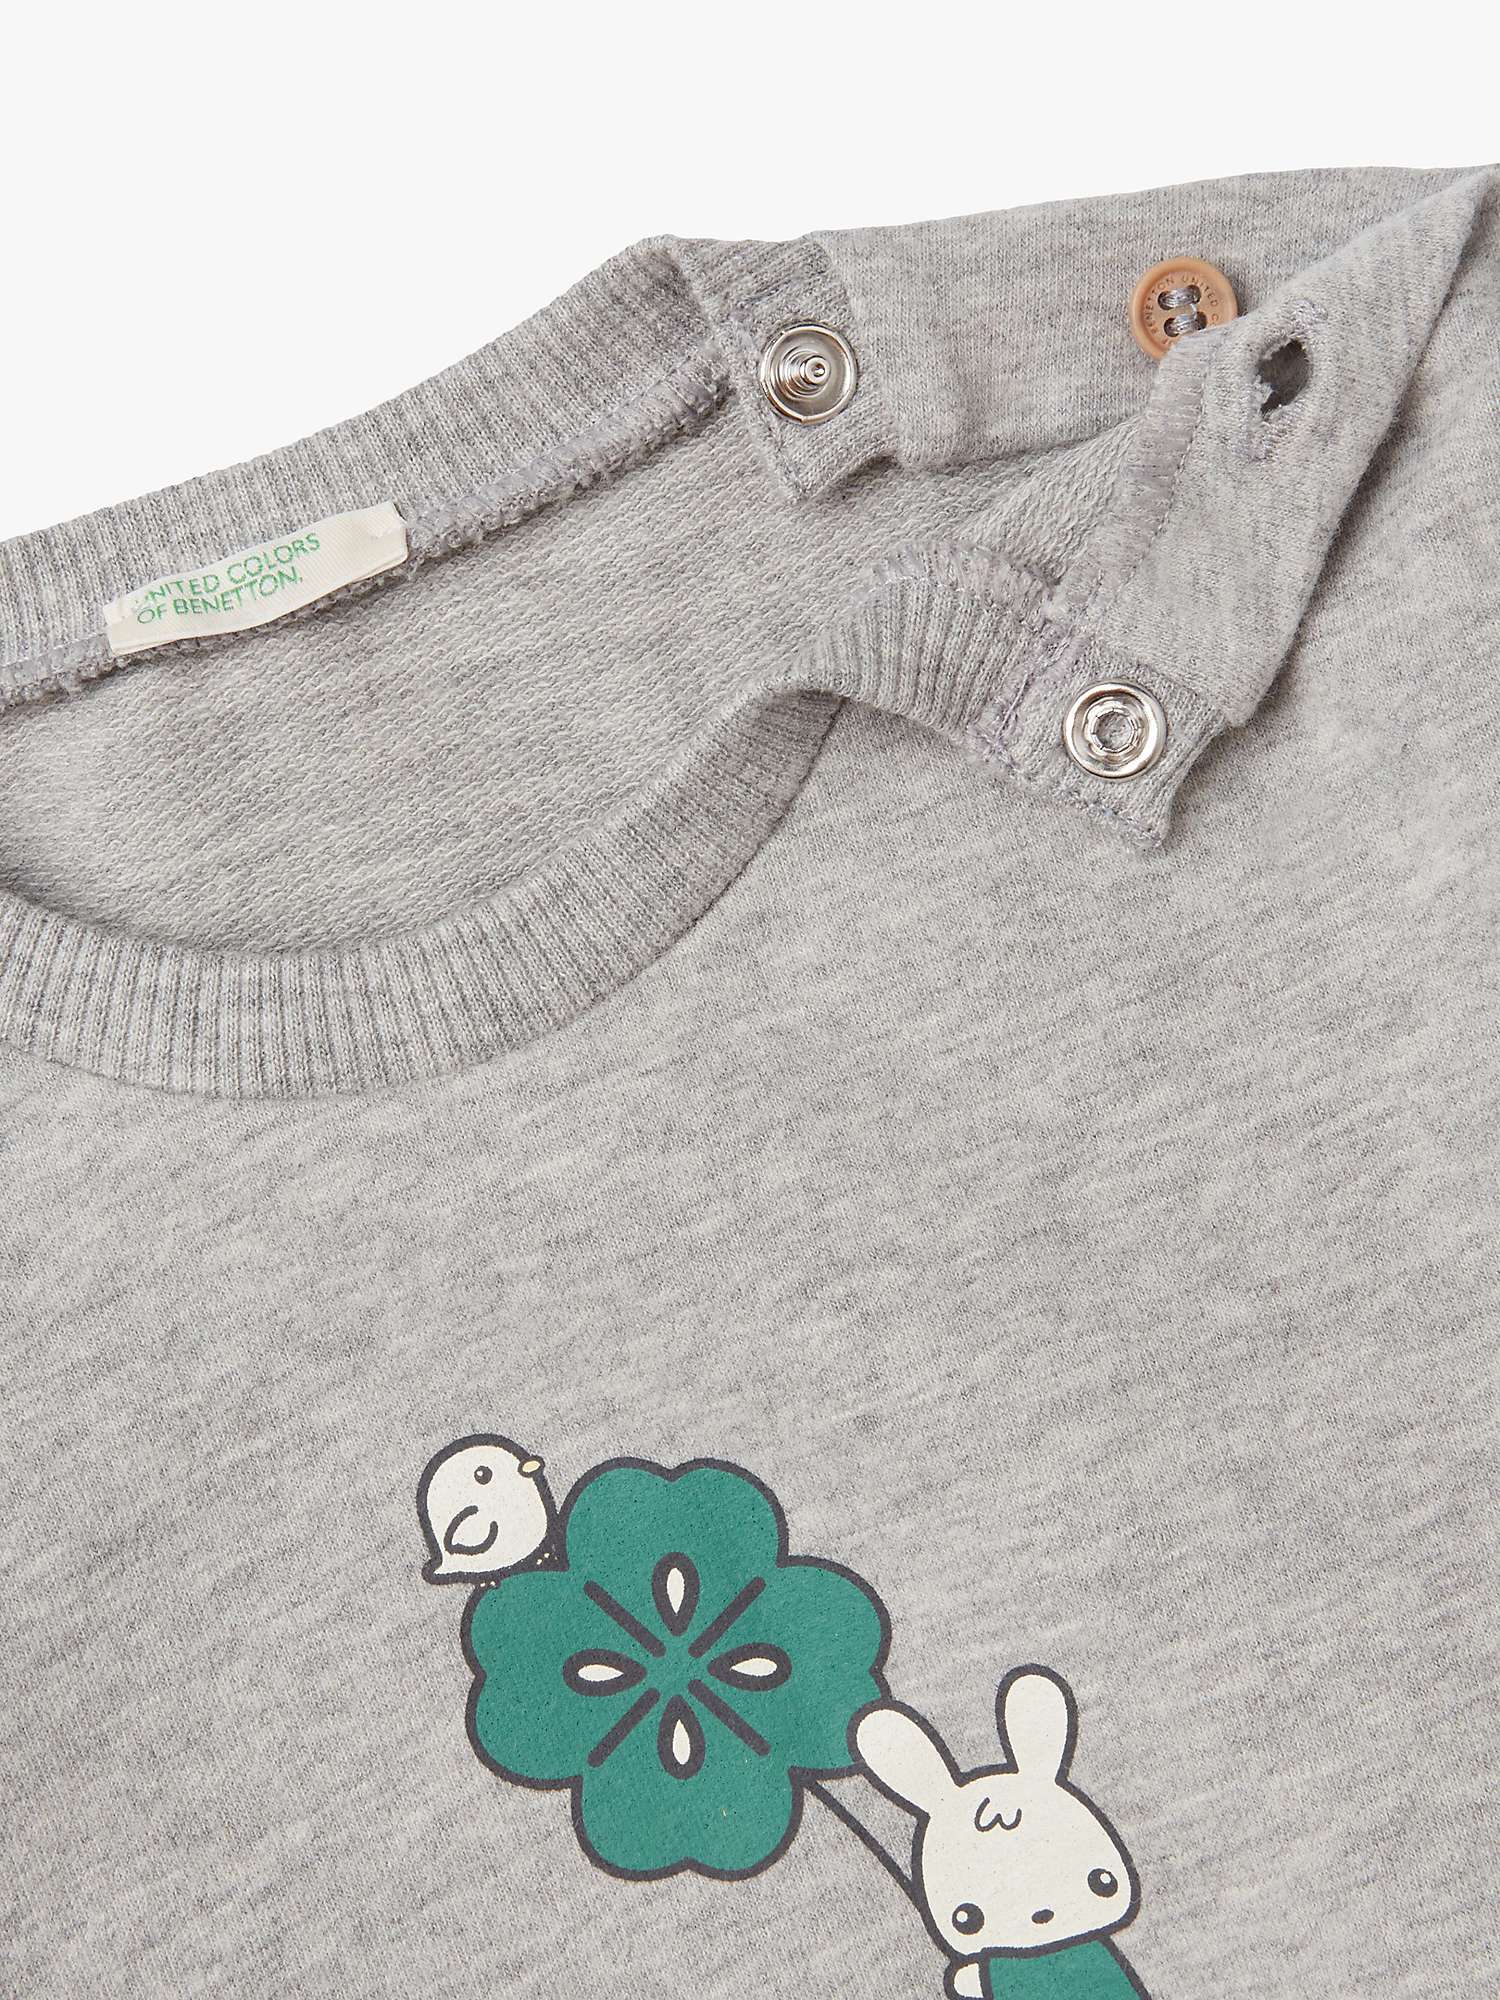 Buy Benetton Baby Bunny Be Lucky Sweatshirt & Joggers Set, Melange Online at johnlewis.com